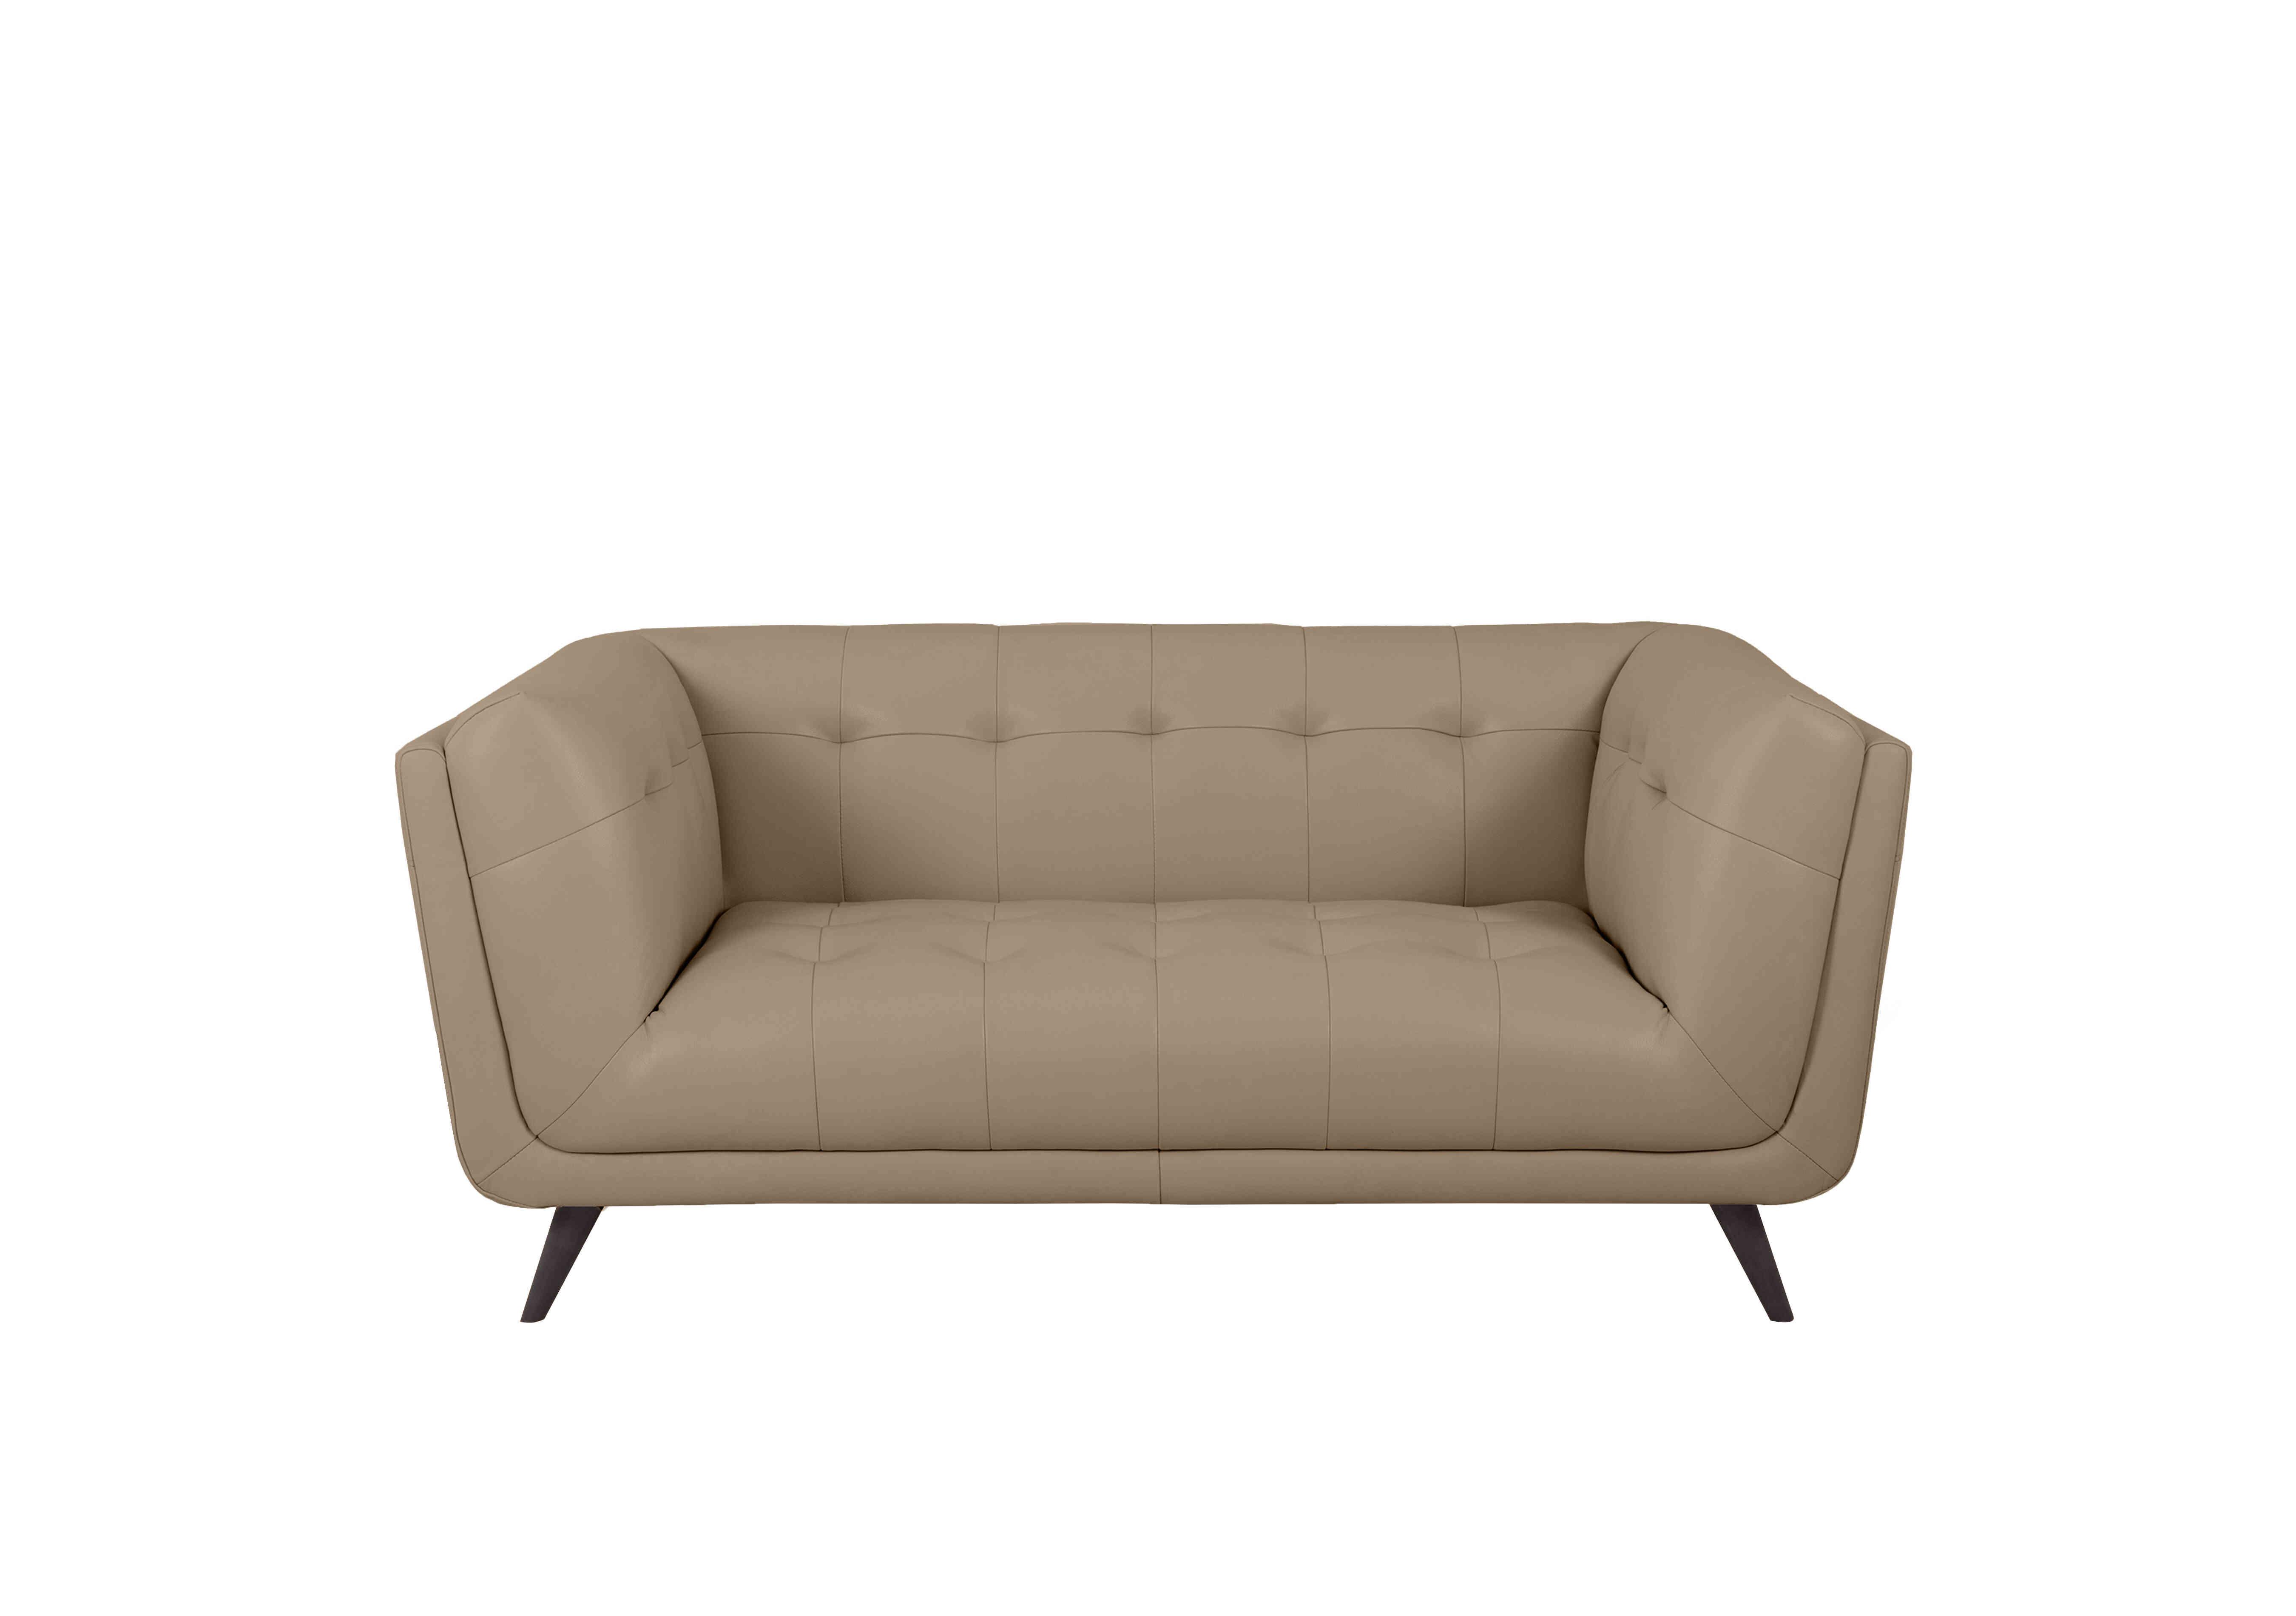 Rene 2 Seater Leather Sofa in Montana Barley on Furniture Village